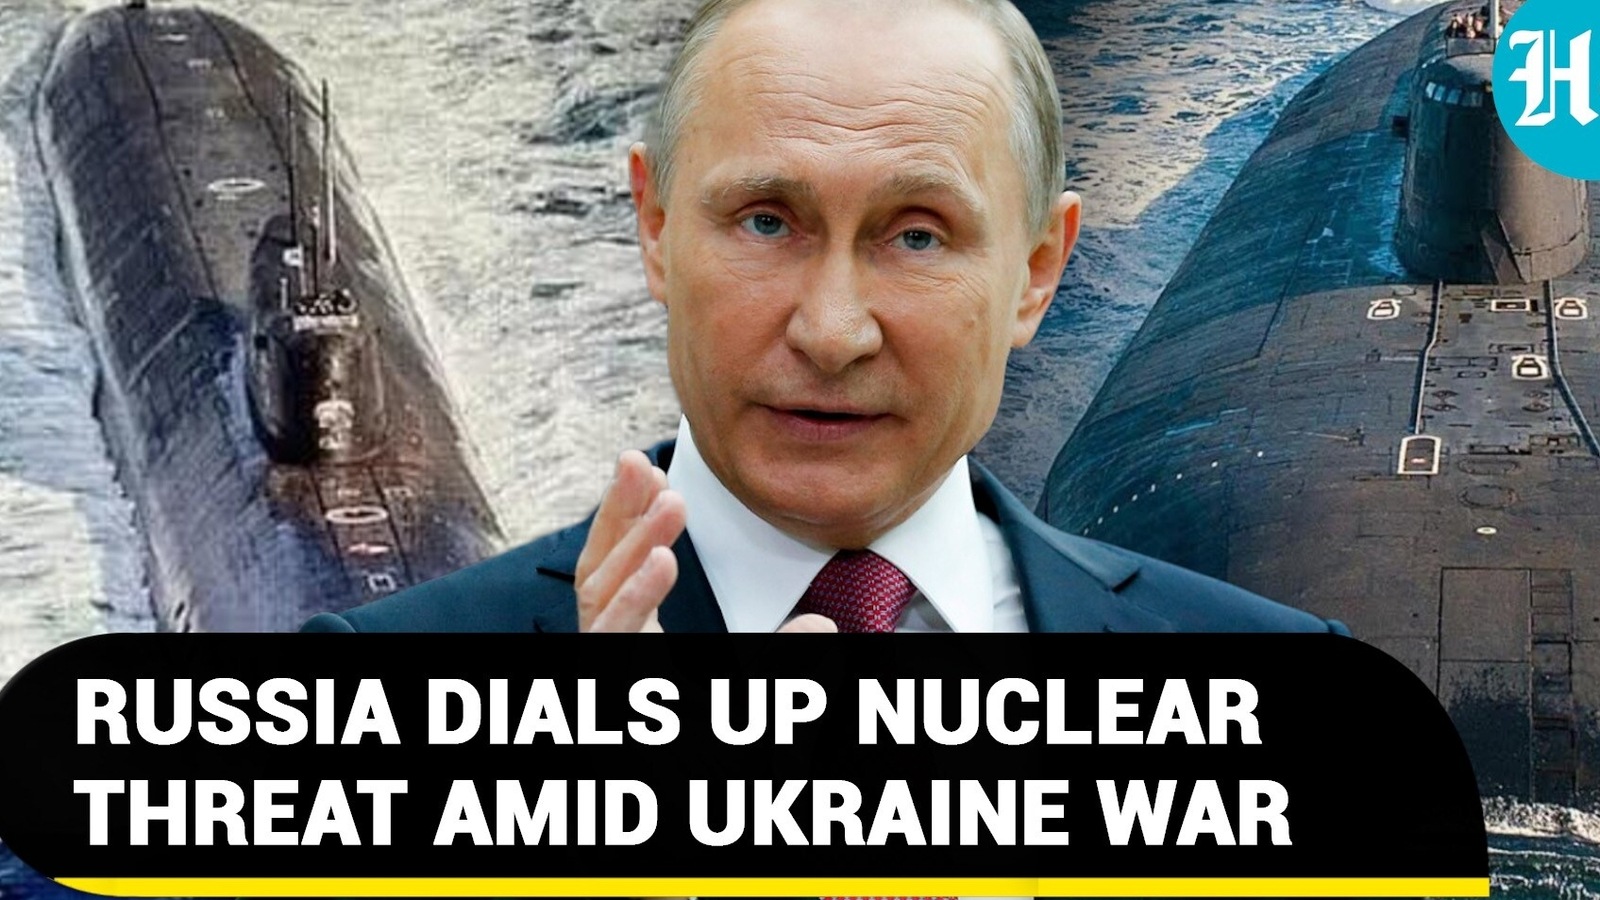 Putin Flexes Nuclear Muscle Russia Tests New Nuke Strategic Submarine Details Hindustan Times 3461